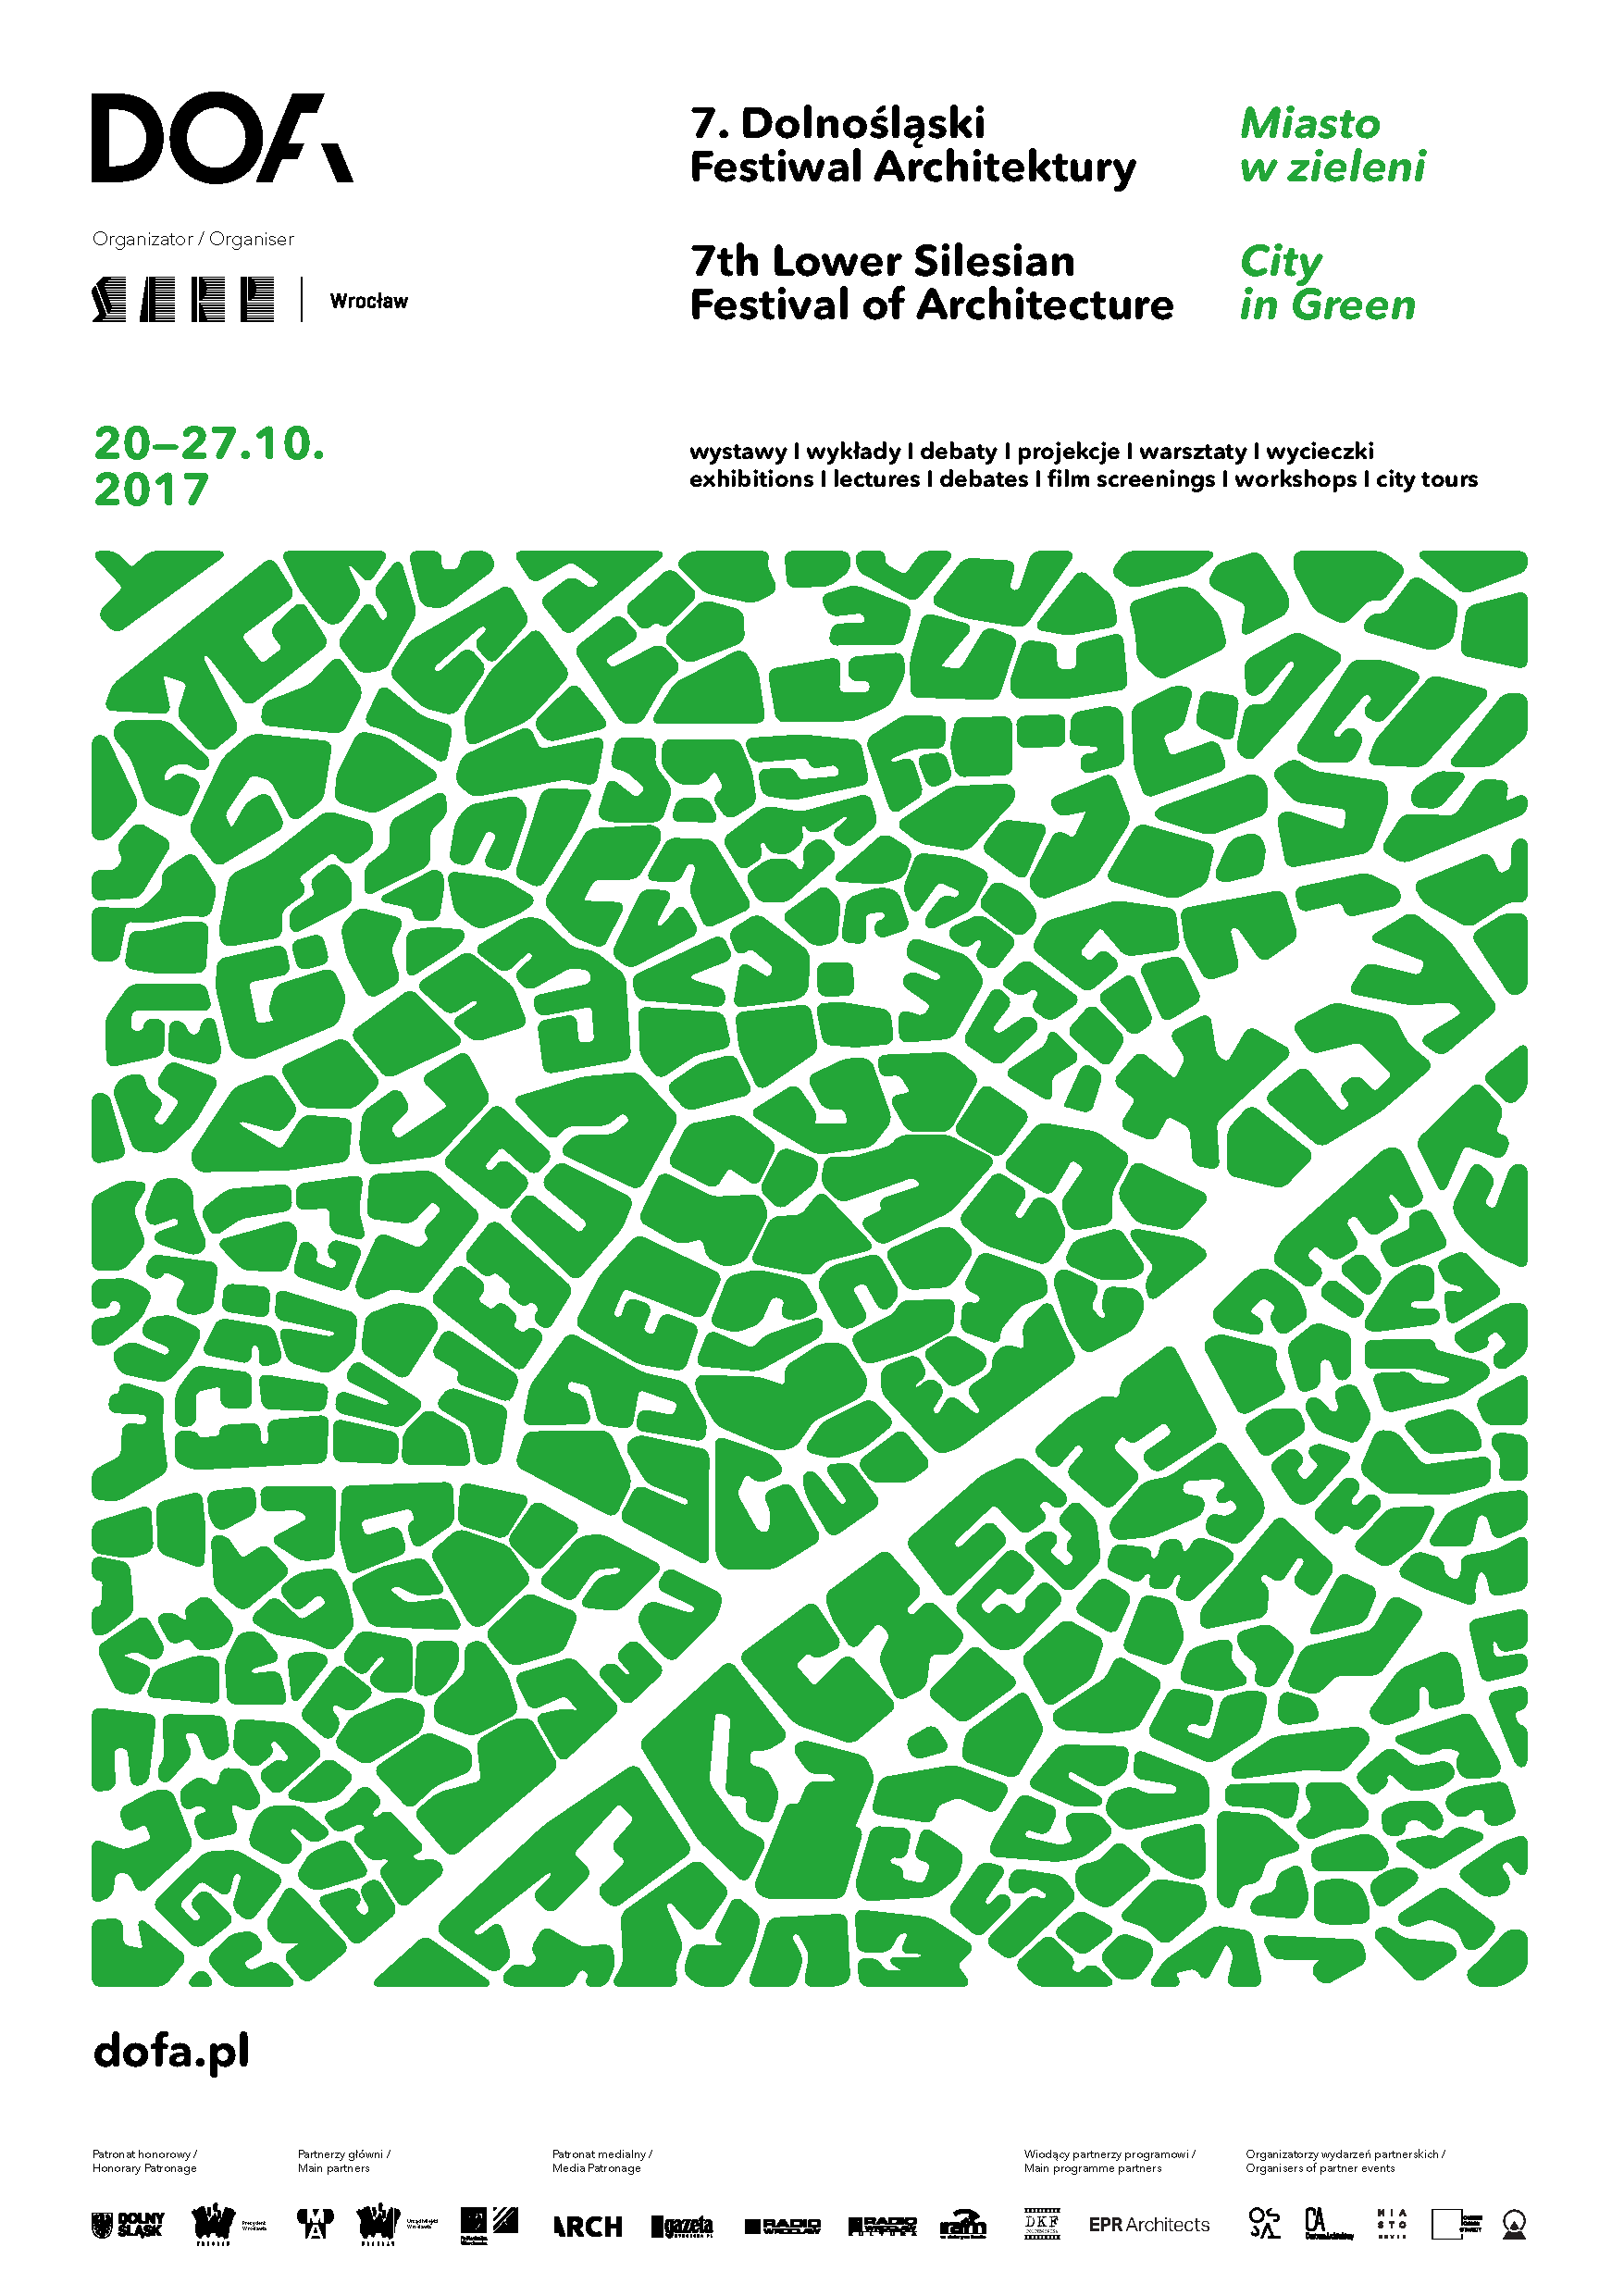 Dolnośląski Festiwal Architektury Dofa 2017 3321